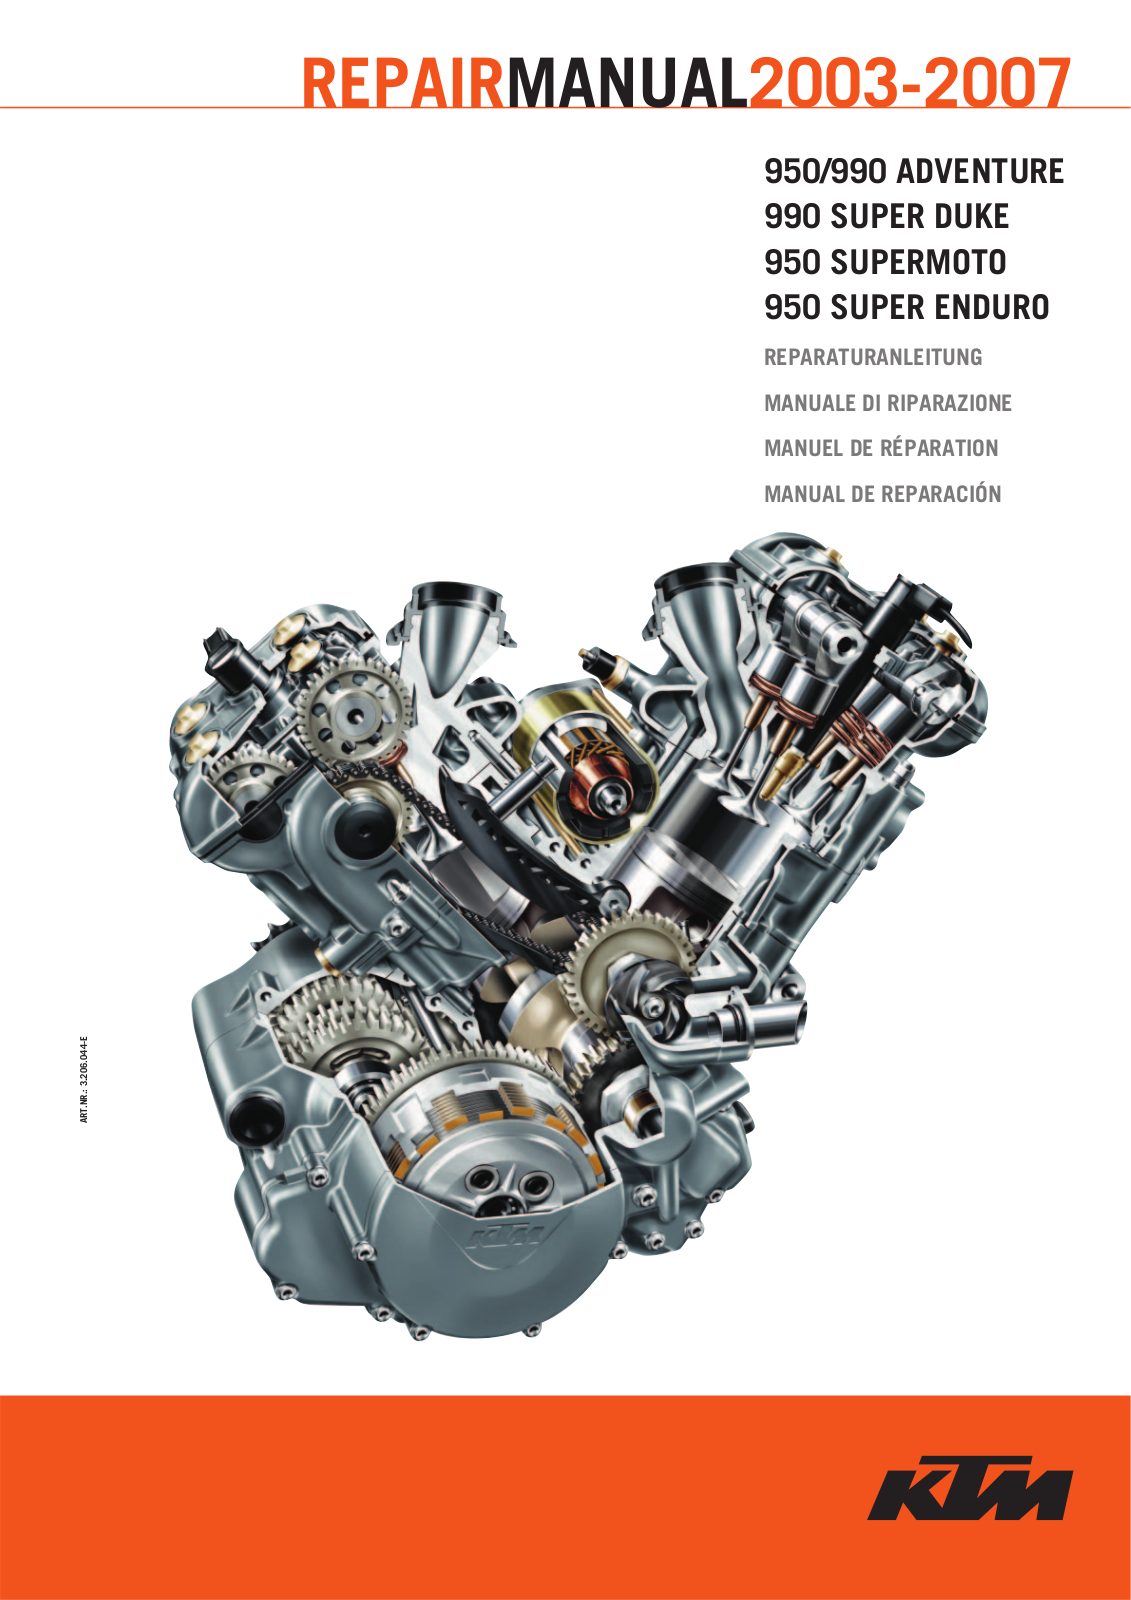 KTM 990 Super Duke, 950 SUPERMOTO, 950 SUPER ENDURO Repair manual